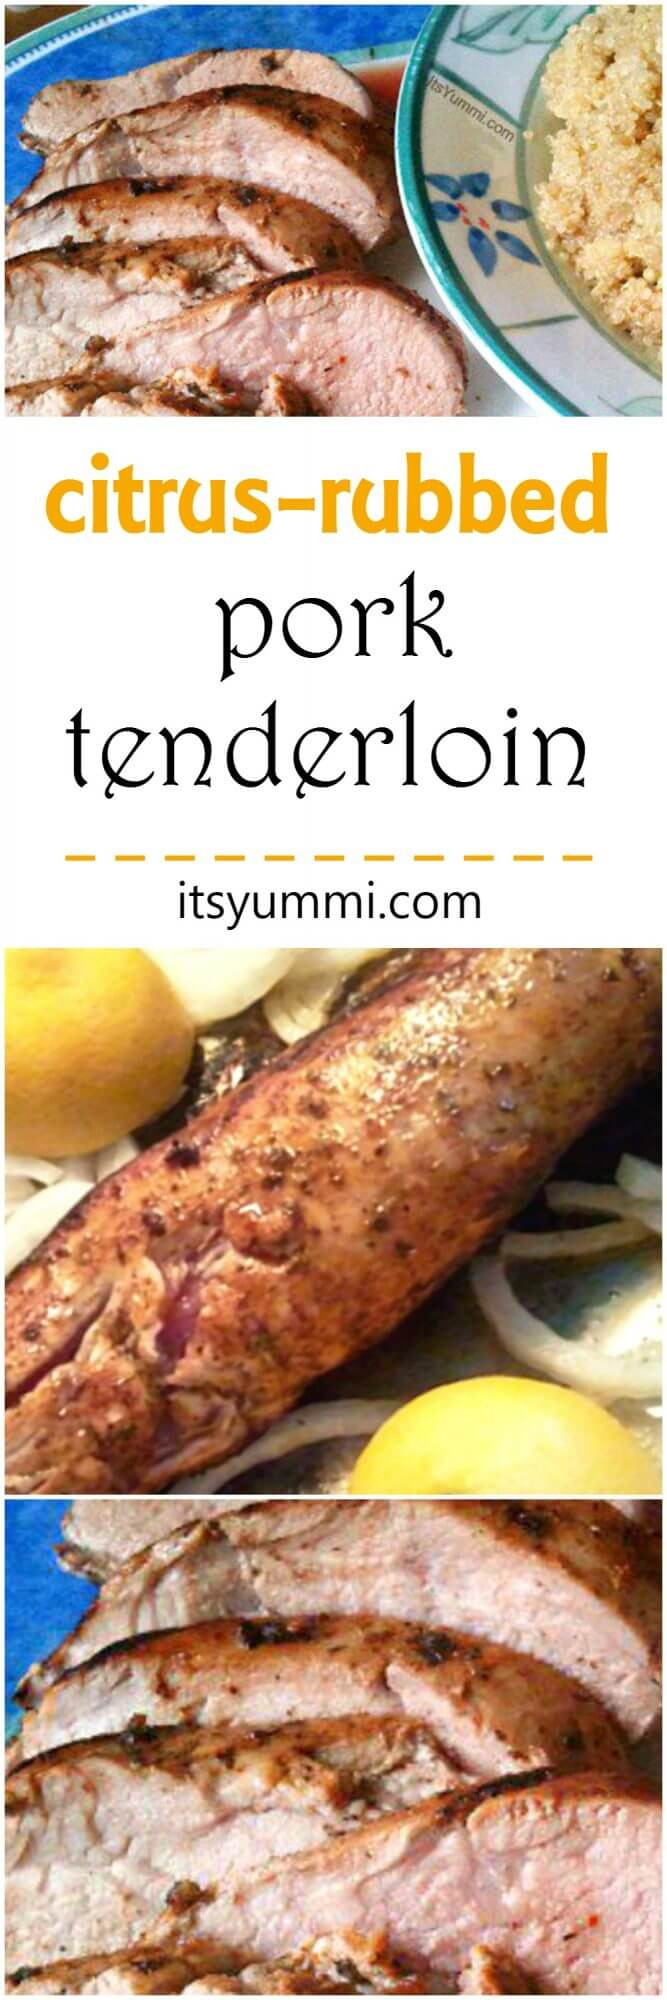 Boneless Pork Tenderloin Recipes
 How to Cook Boneless Pork Tenderloin in 5 Easy Steps